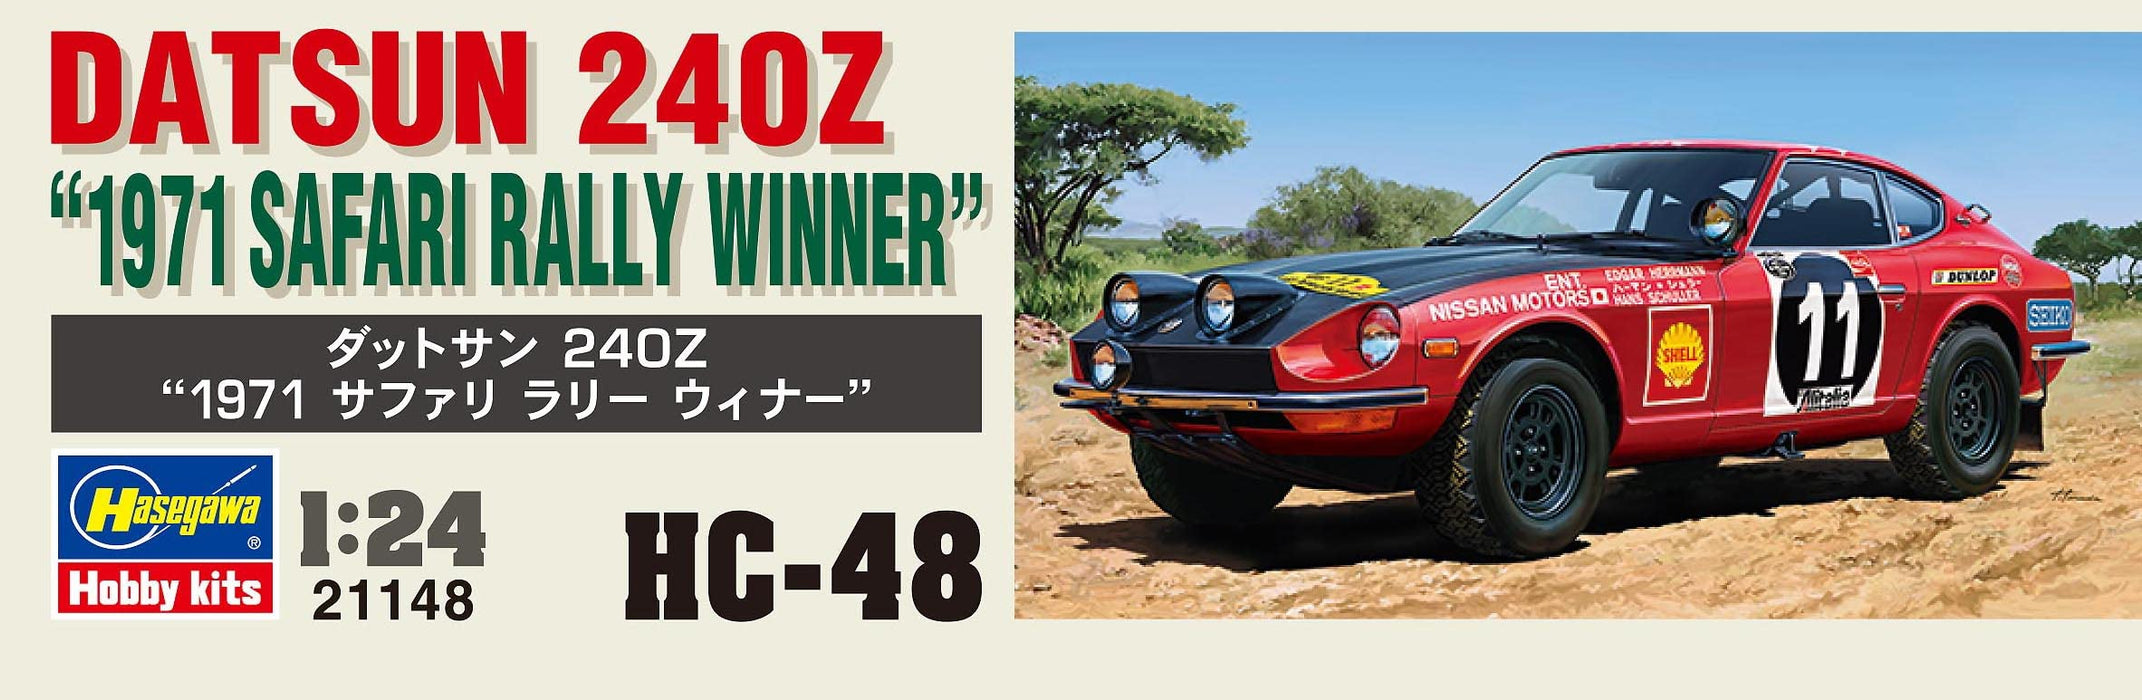 HASEGAWA 1/24 Datsun Fairlady 240Z 1971 Safari Rally Winner Plastic Model